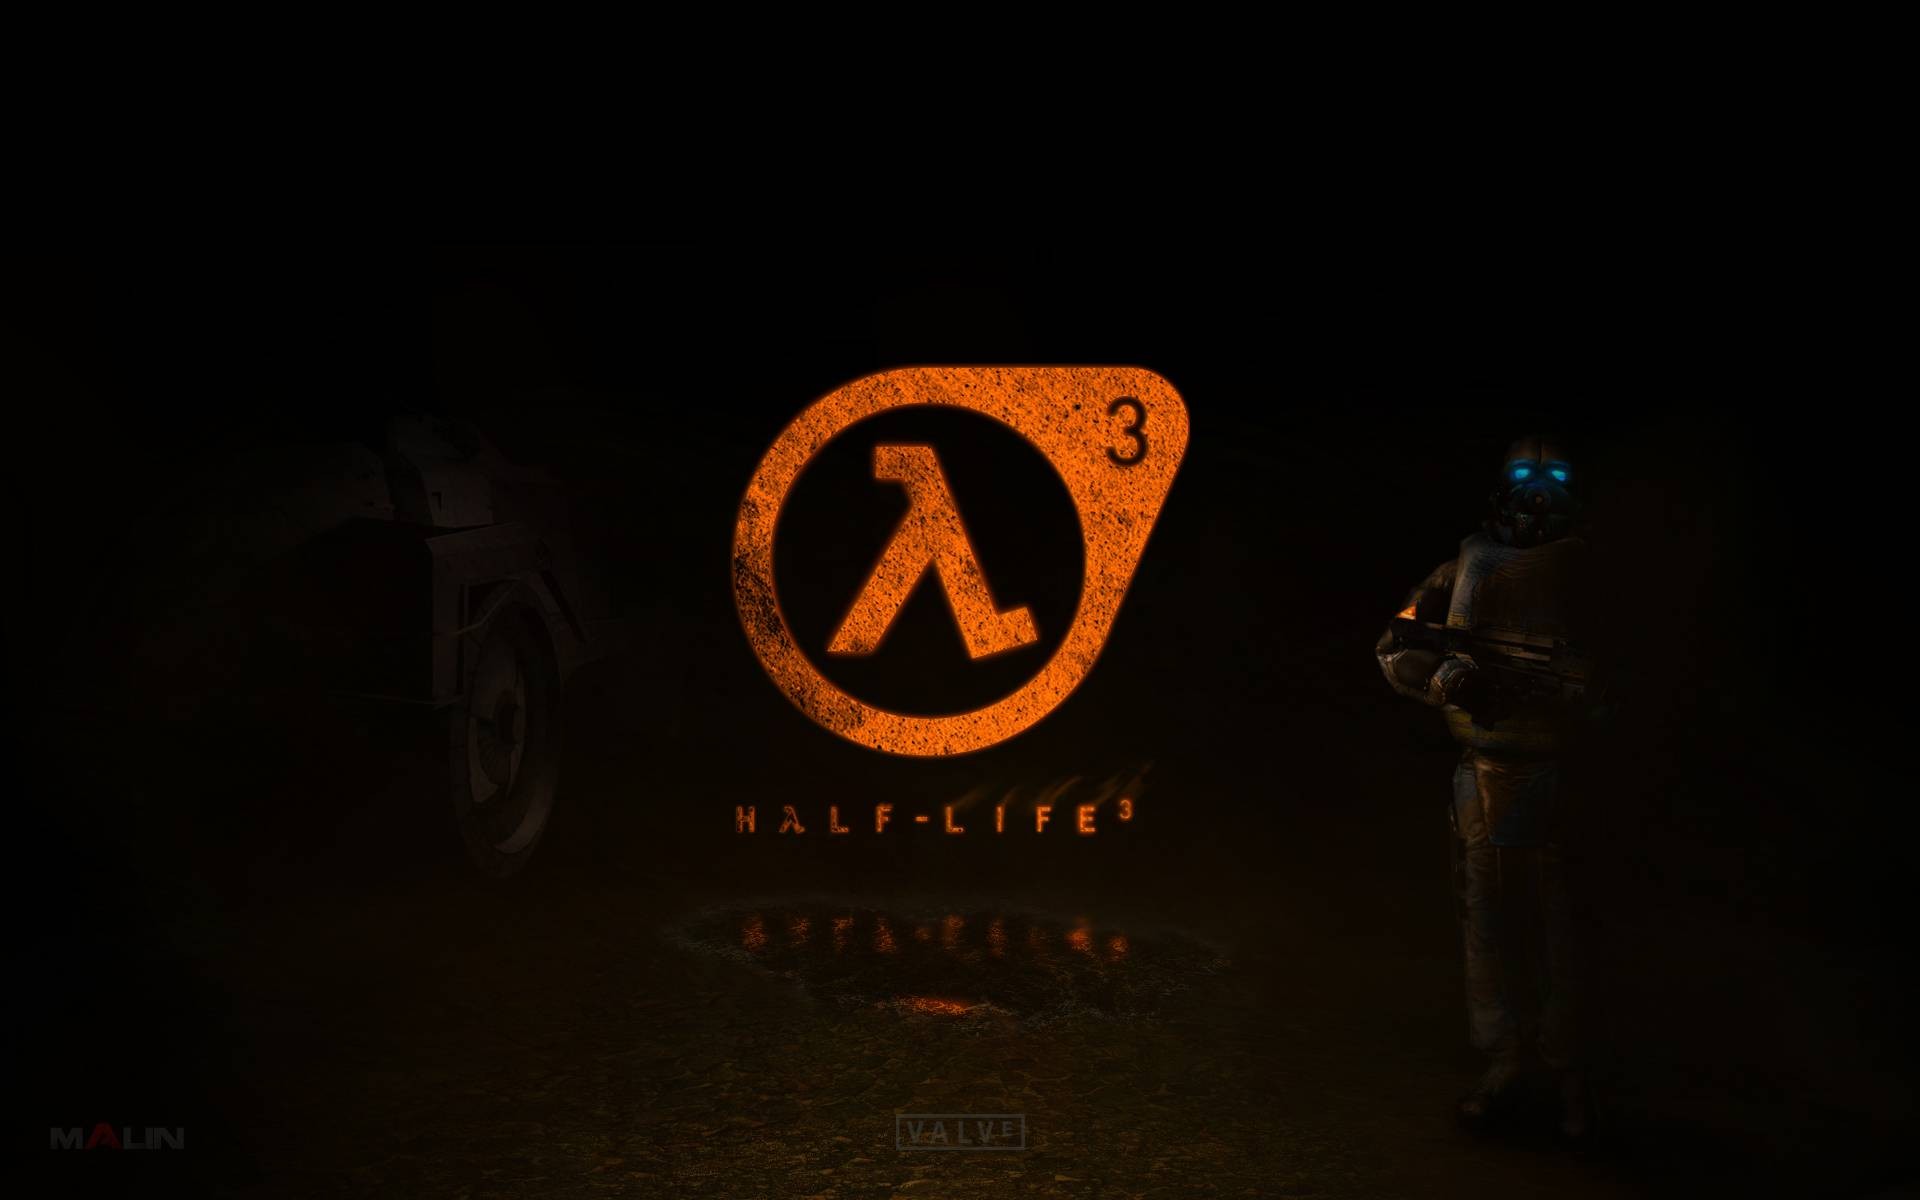 General 1920x1200 Half-Life Half-Life 3 video games fan art PC gaming dark background simple background Valve Corporation